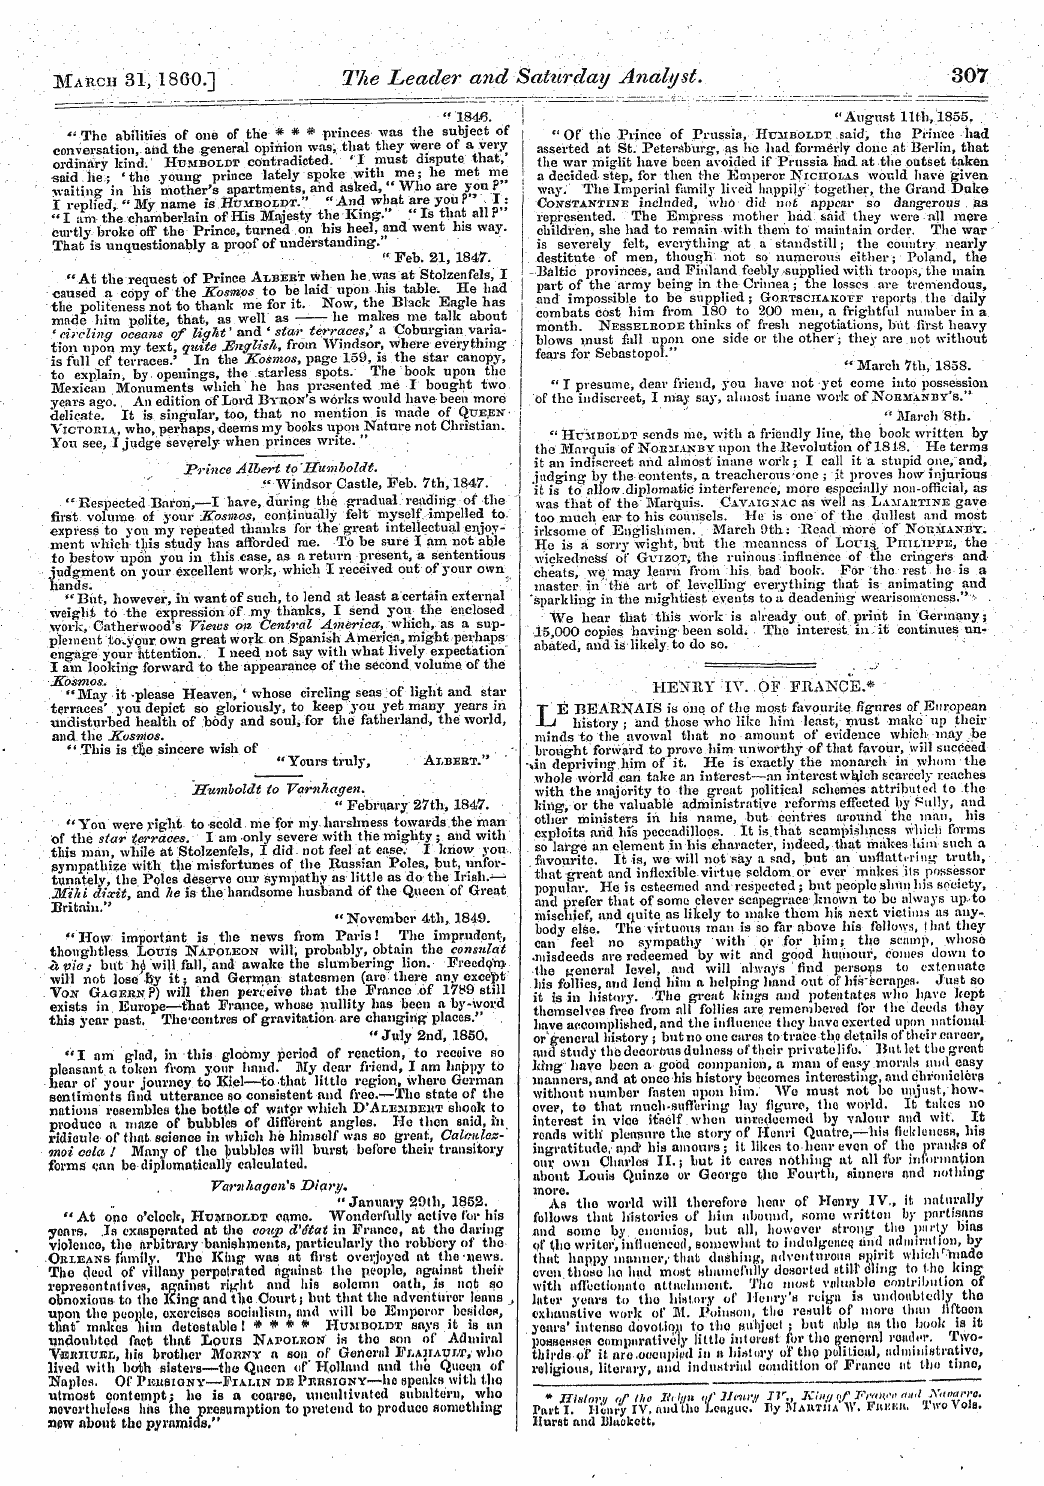 Leader (1850-1860): jS F Y, 2nd edition - * Jlinton/ R>R Tho Brian <//' Jjiwjf Jl ...